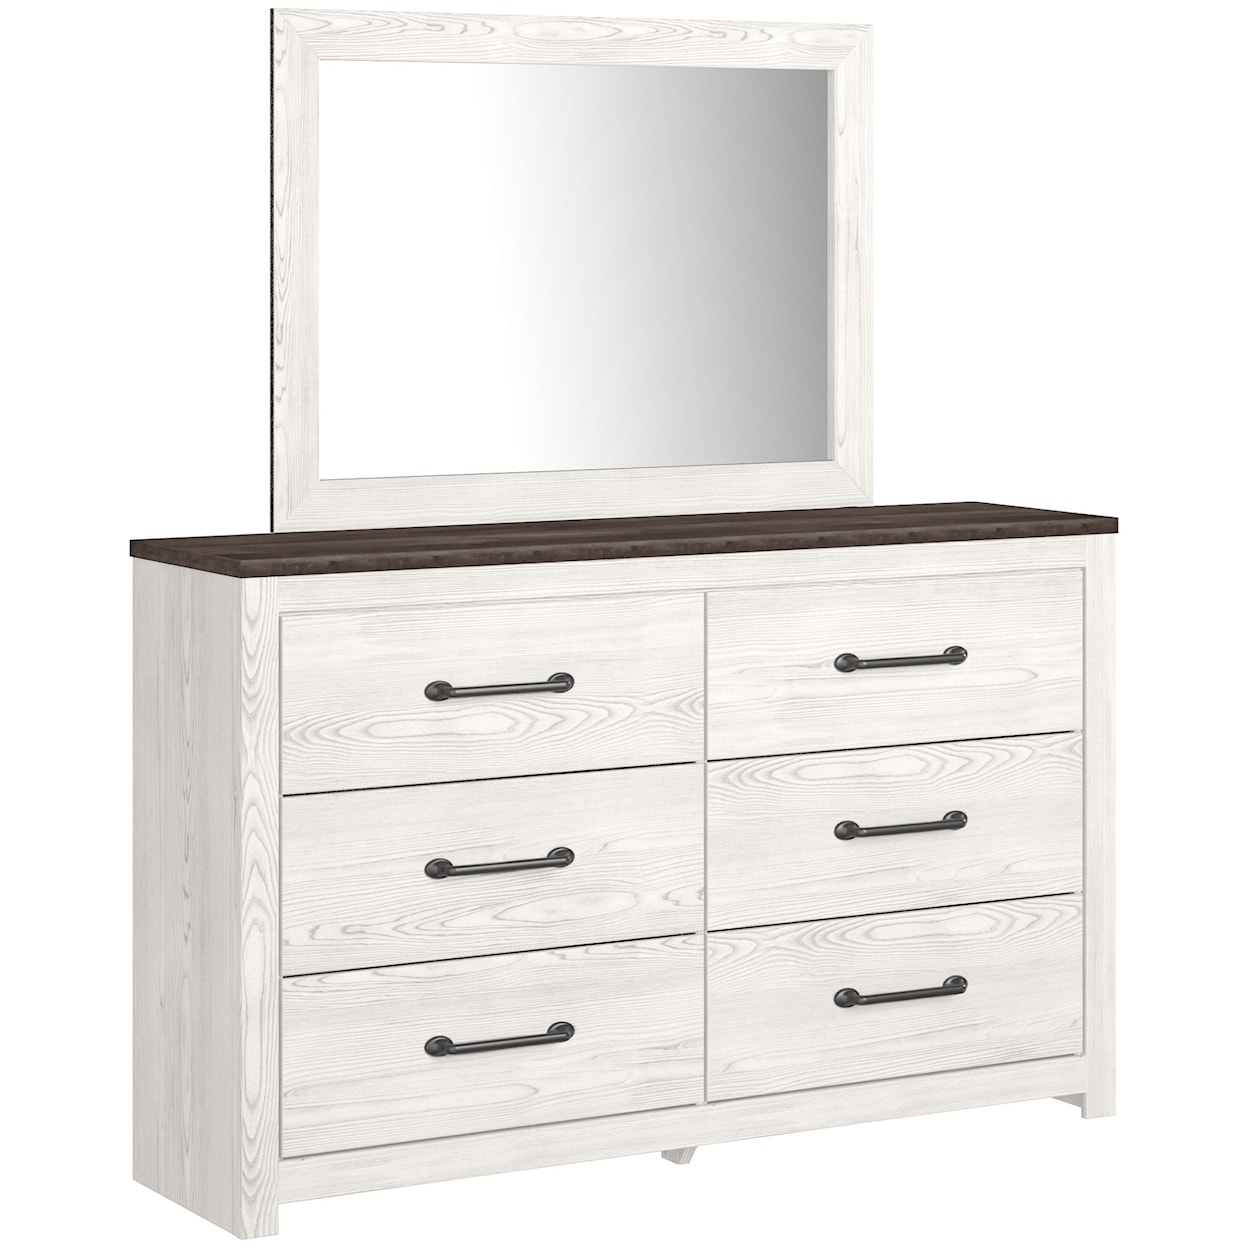 Ashley Furniture Signature Design Gerridan Dresser & Bedroom Mirror